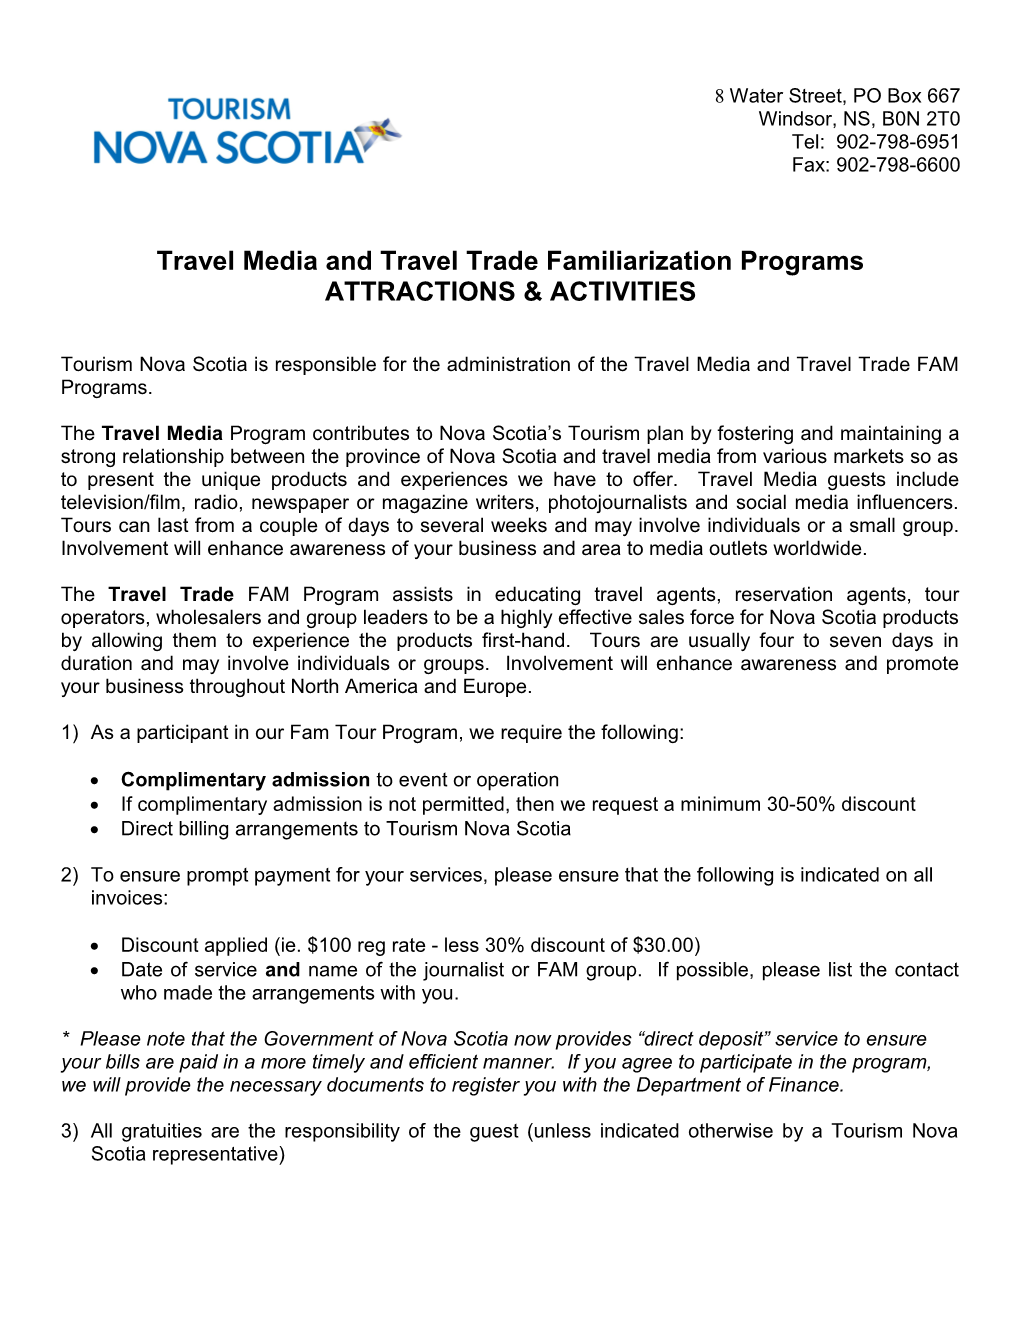 Travel Media and Travel Trade Familiarization Programs